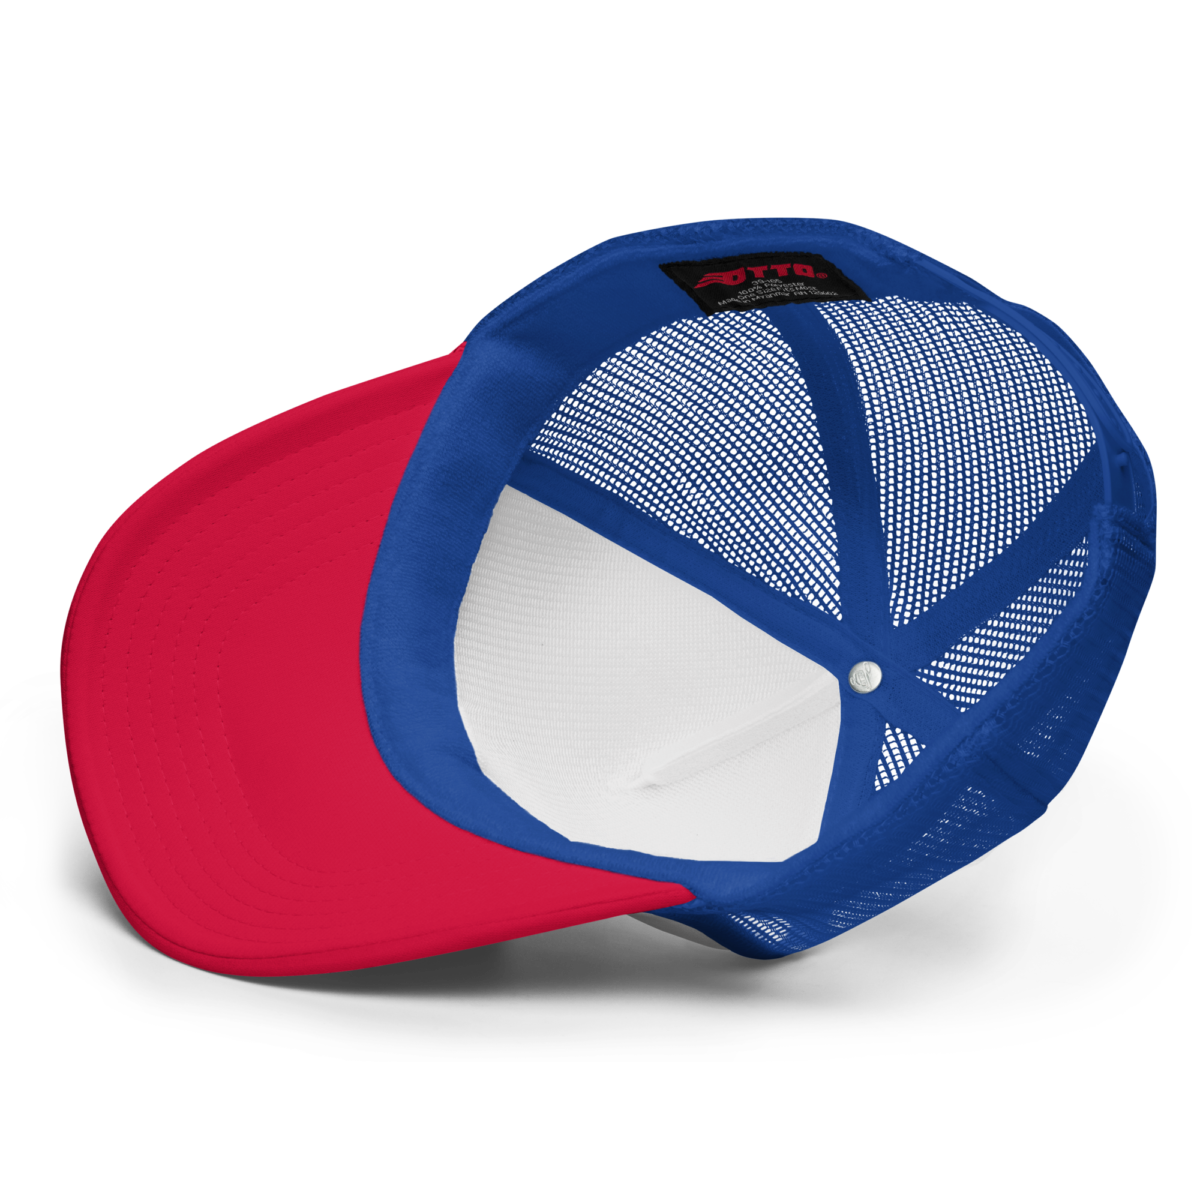 foam trucker hat white royal red one size product details 6308d1ca7291f - Bitcoin "Pepsi" Foam Trucker Hat